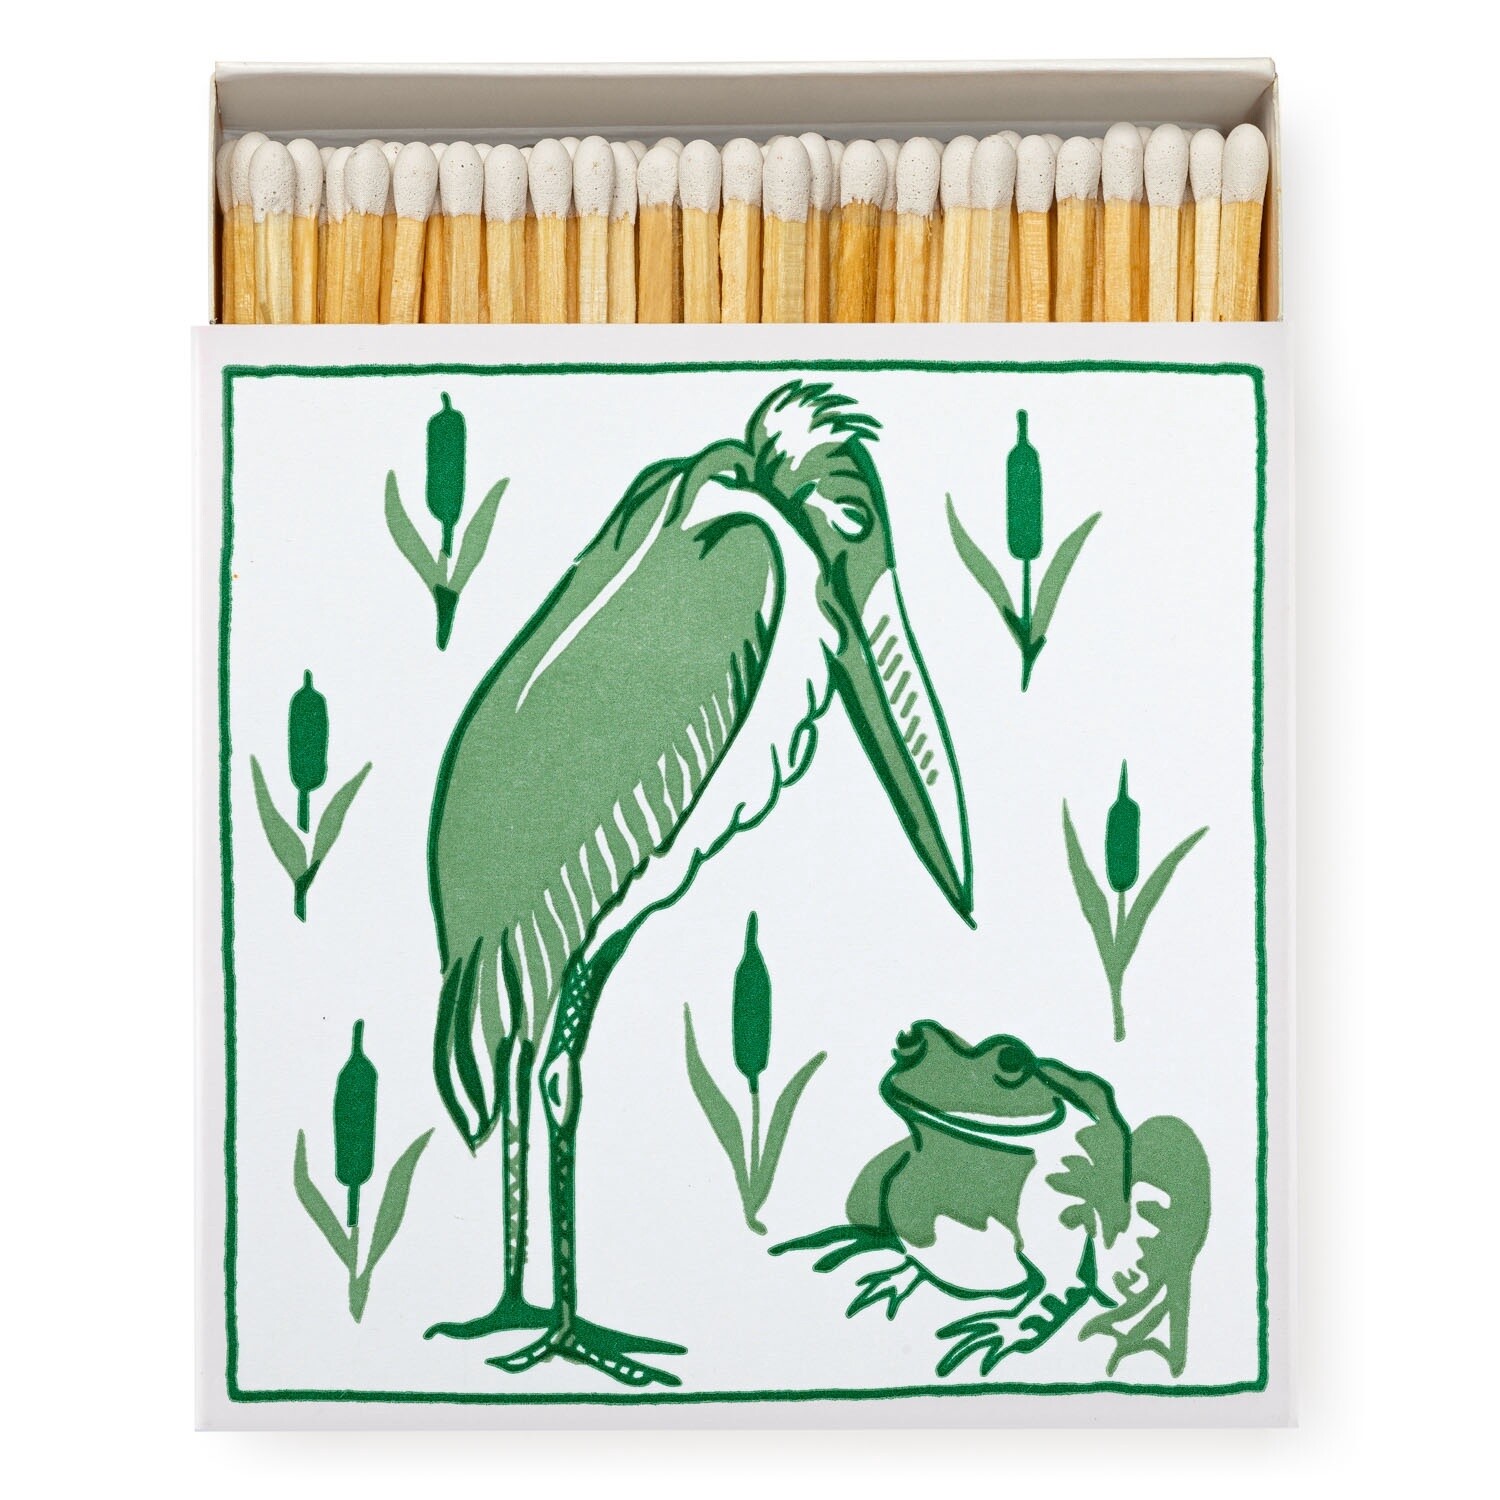 Stork & Frog Match Box